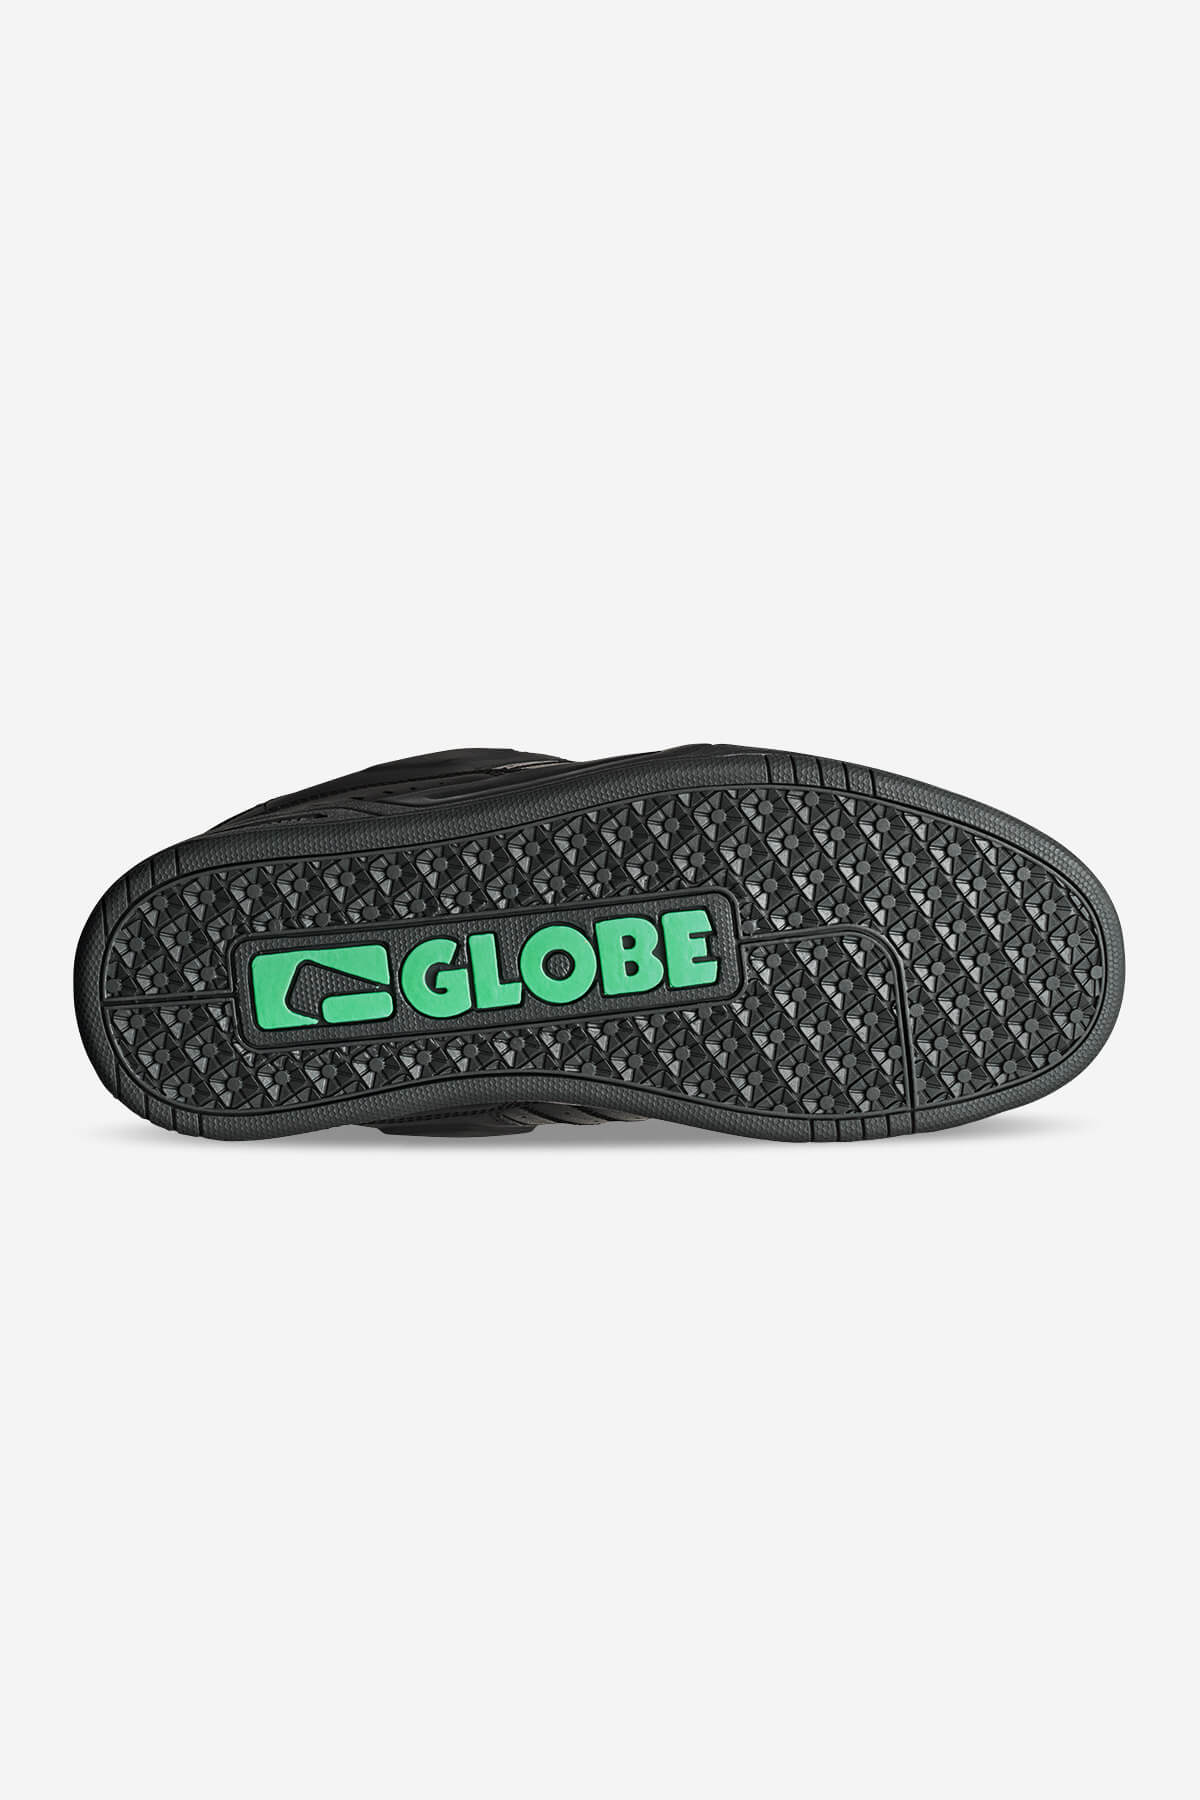 Globe - Fusion - Phantom Dip - skateboard Schuhe